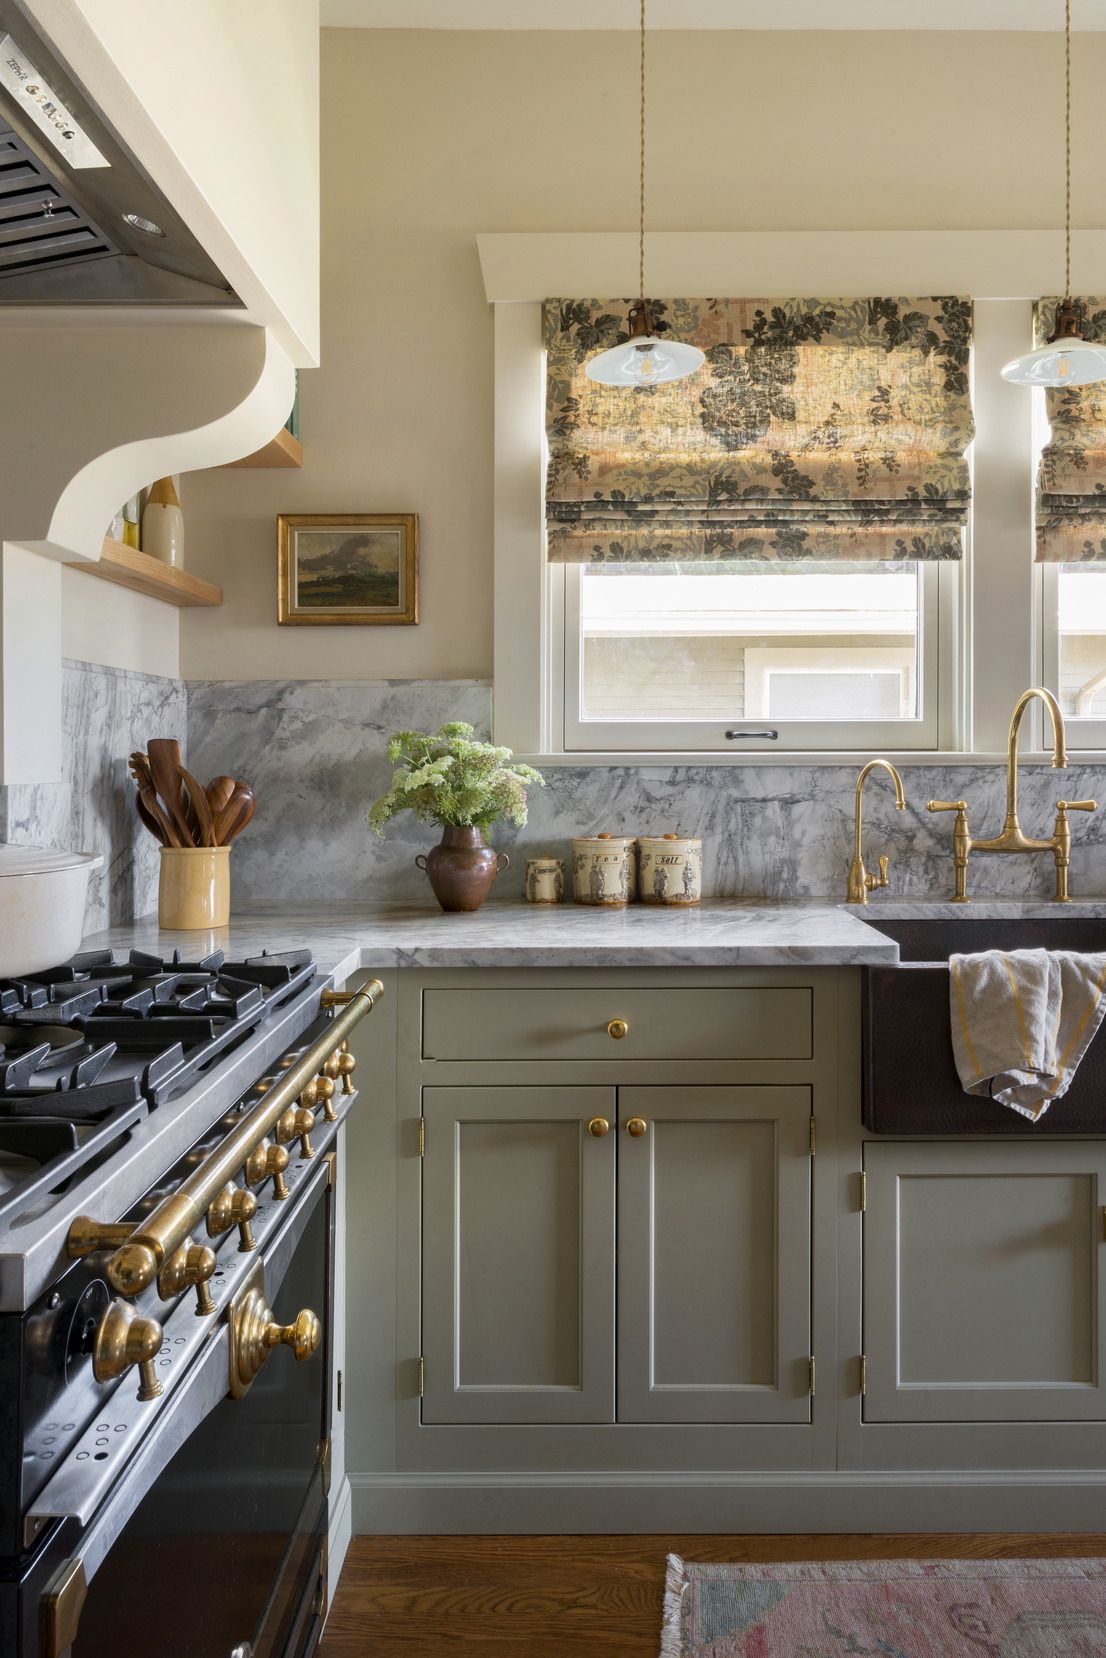 classic inspirational kitchen designs